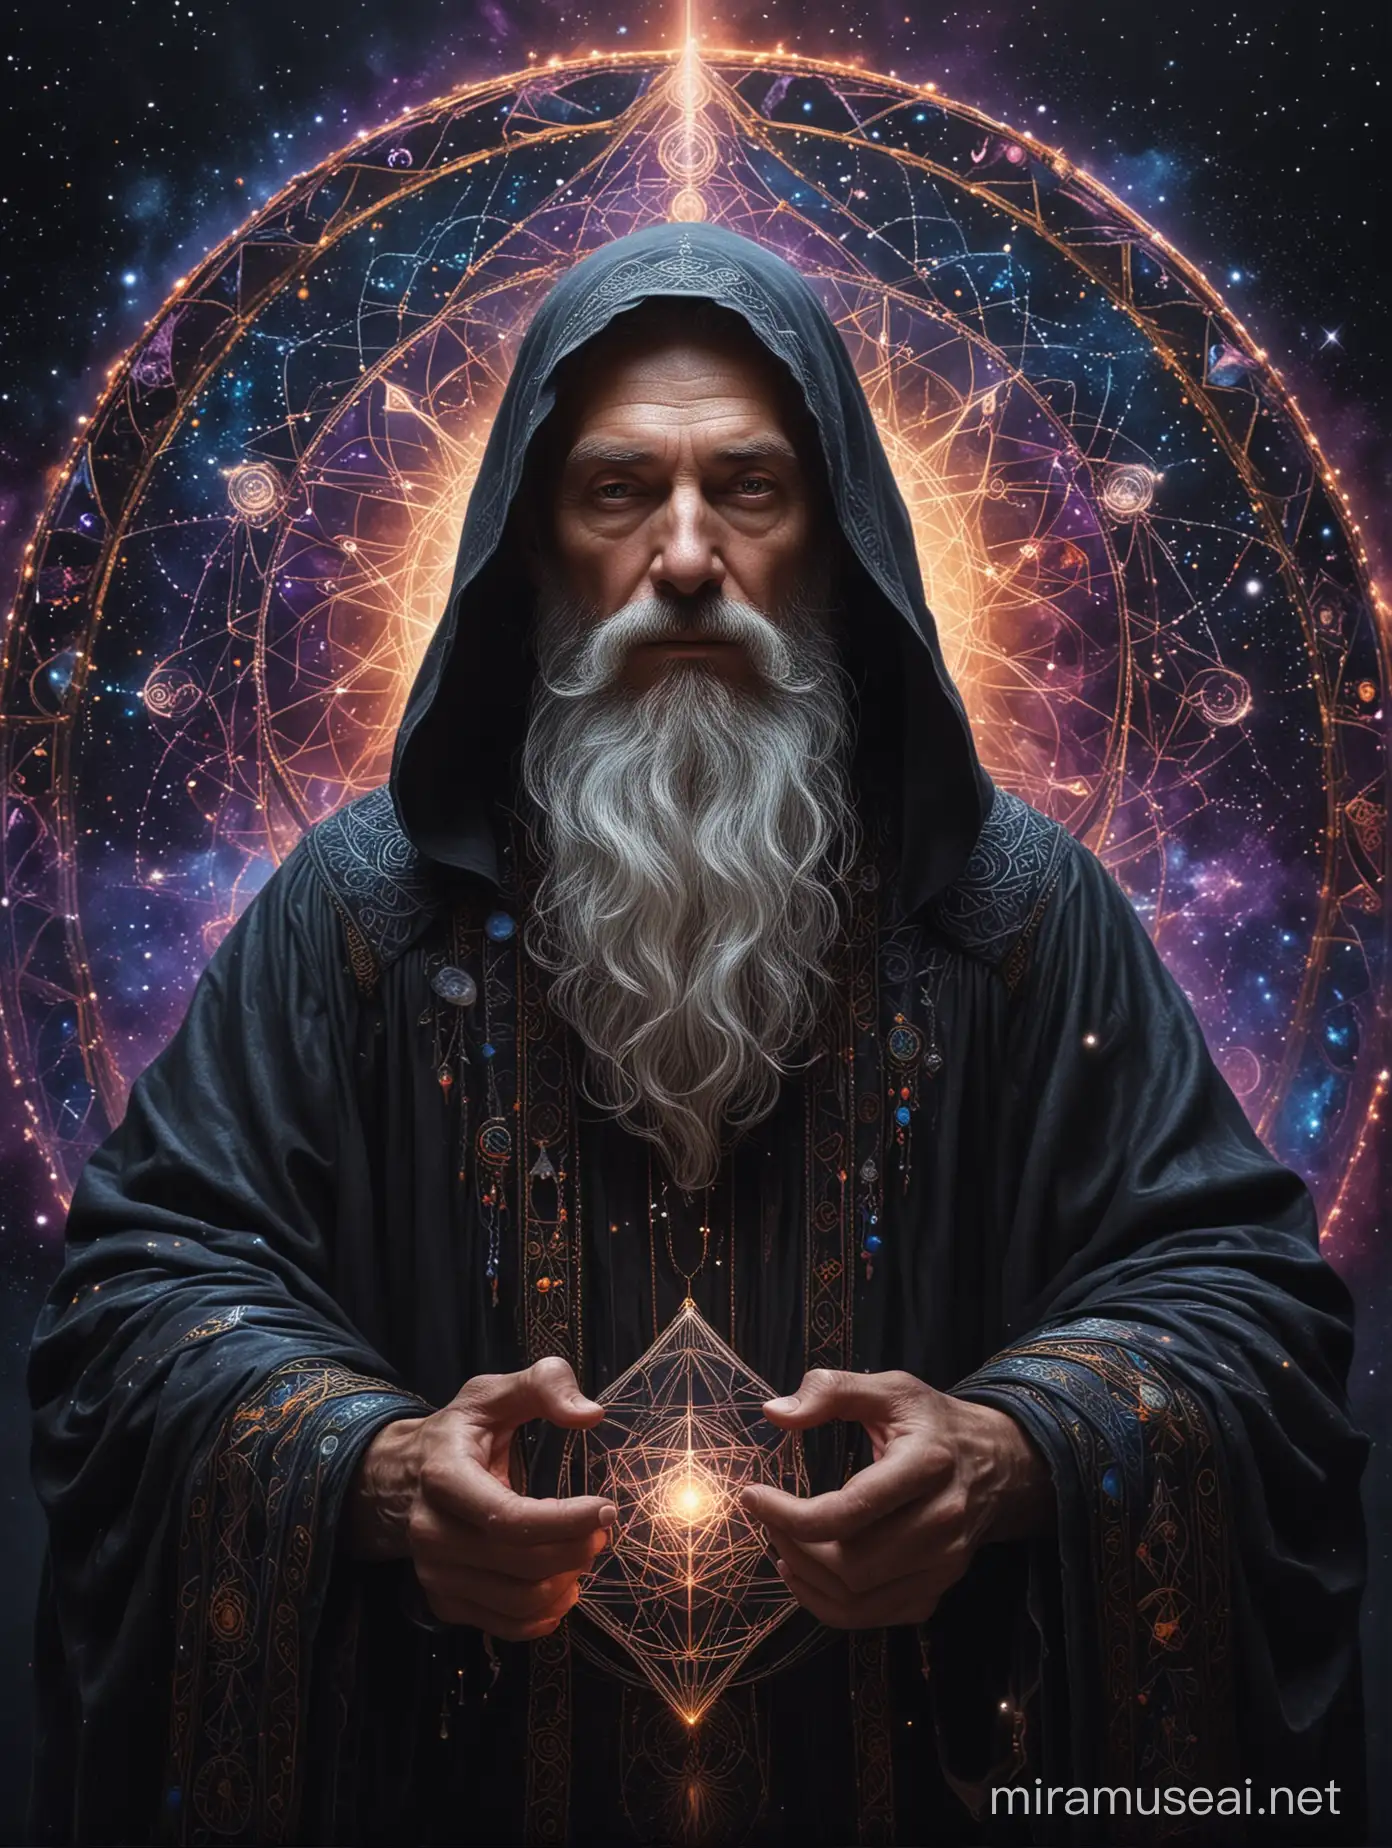 Mystical Wizard Cloaked in Cosmic Robes Amidst Glowing Geometric Mandala